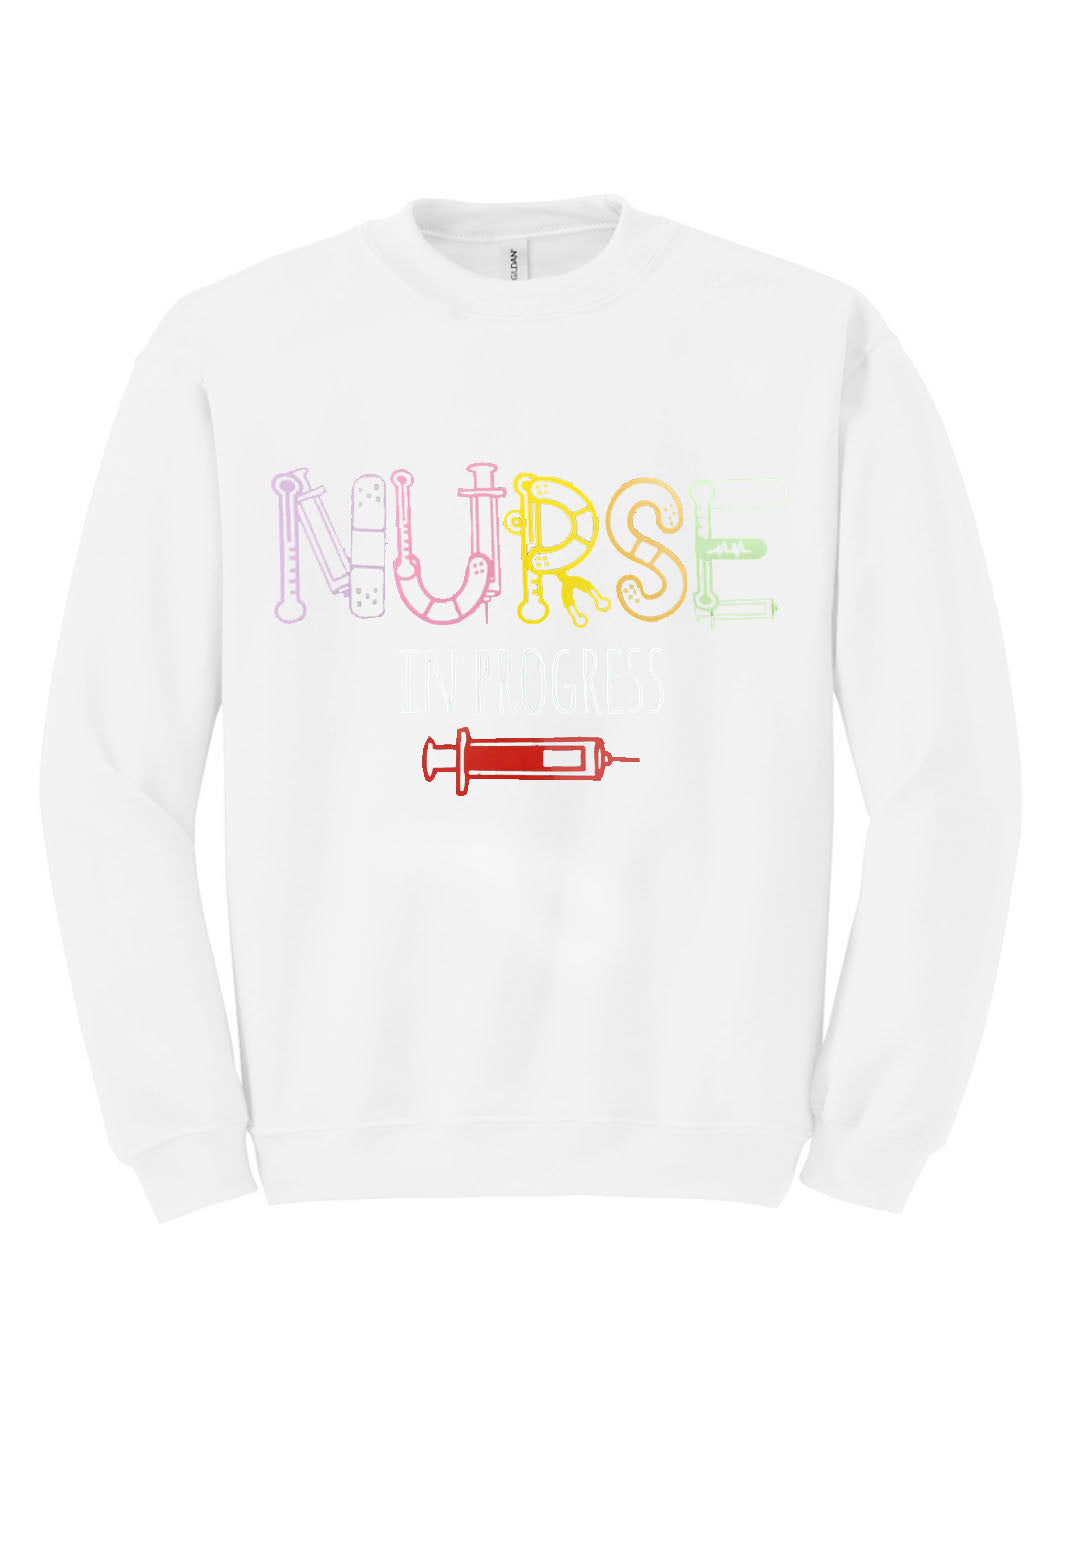 Nurse In Progress Unisex Shirt or Crew